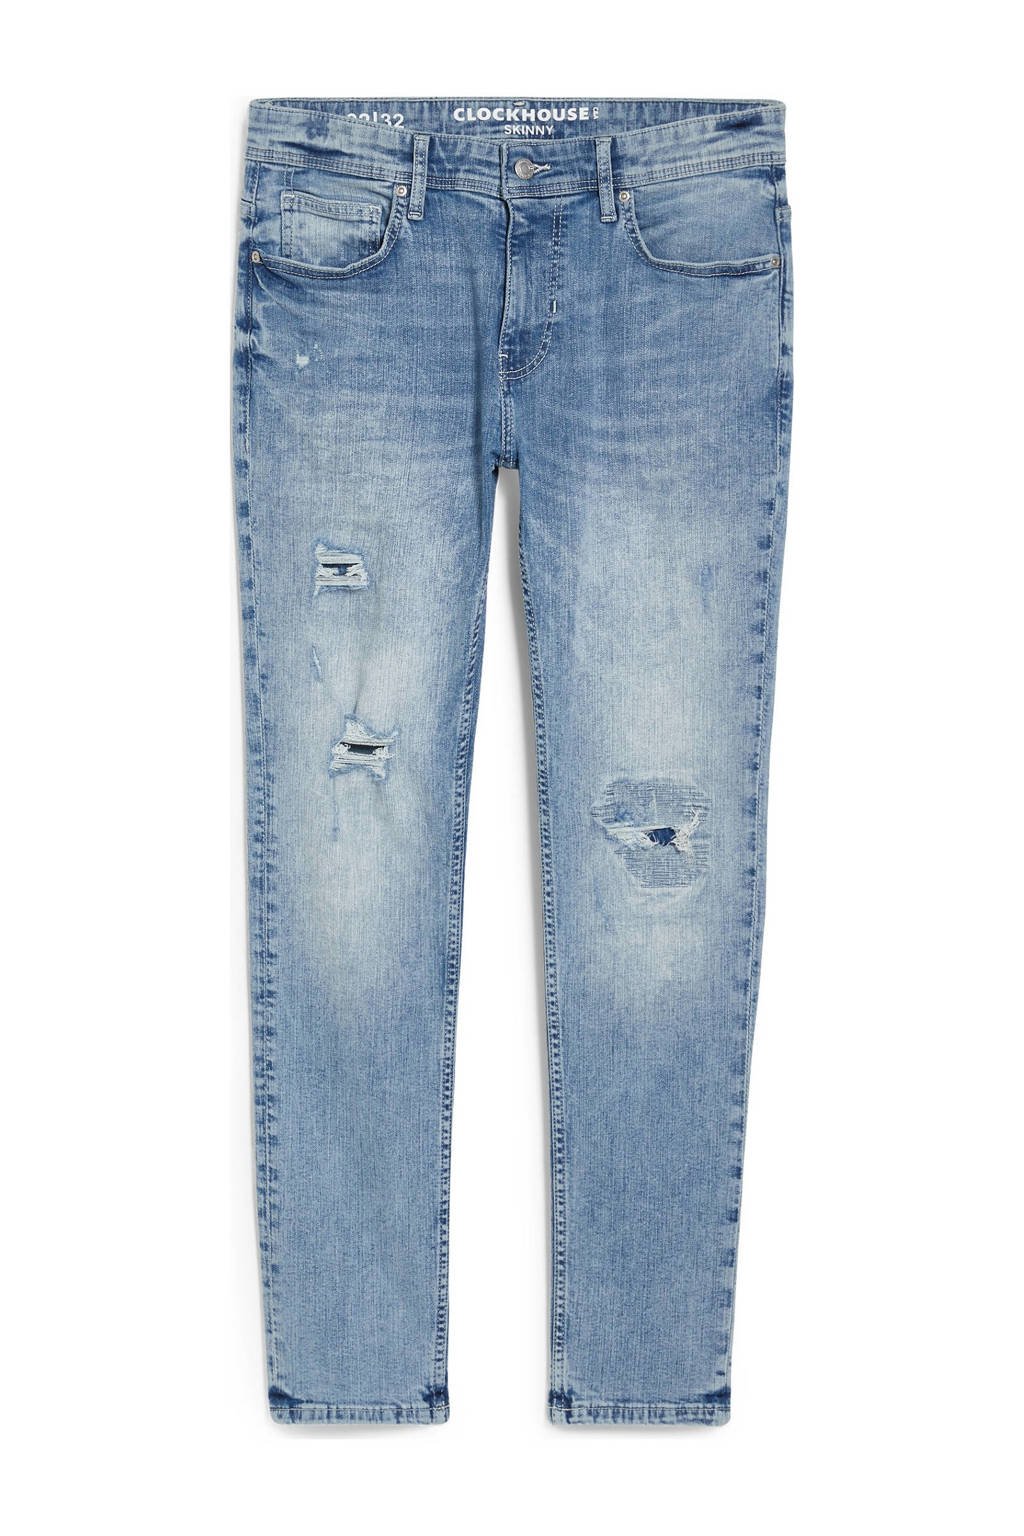 C&A Clockhouse skinny jeans lichtblauw